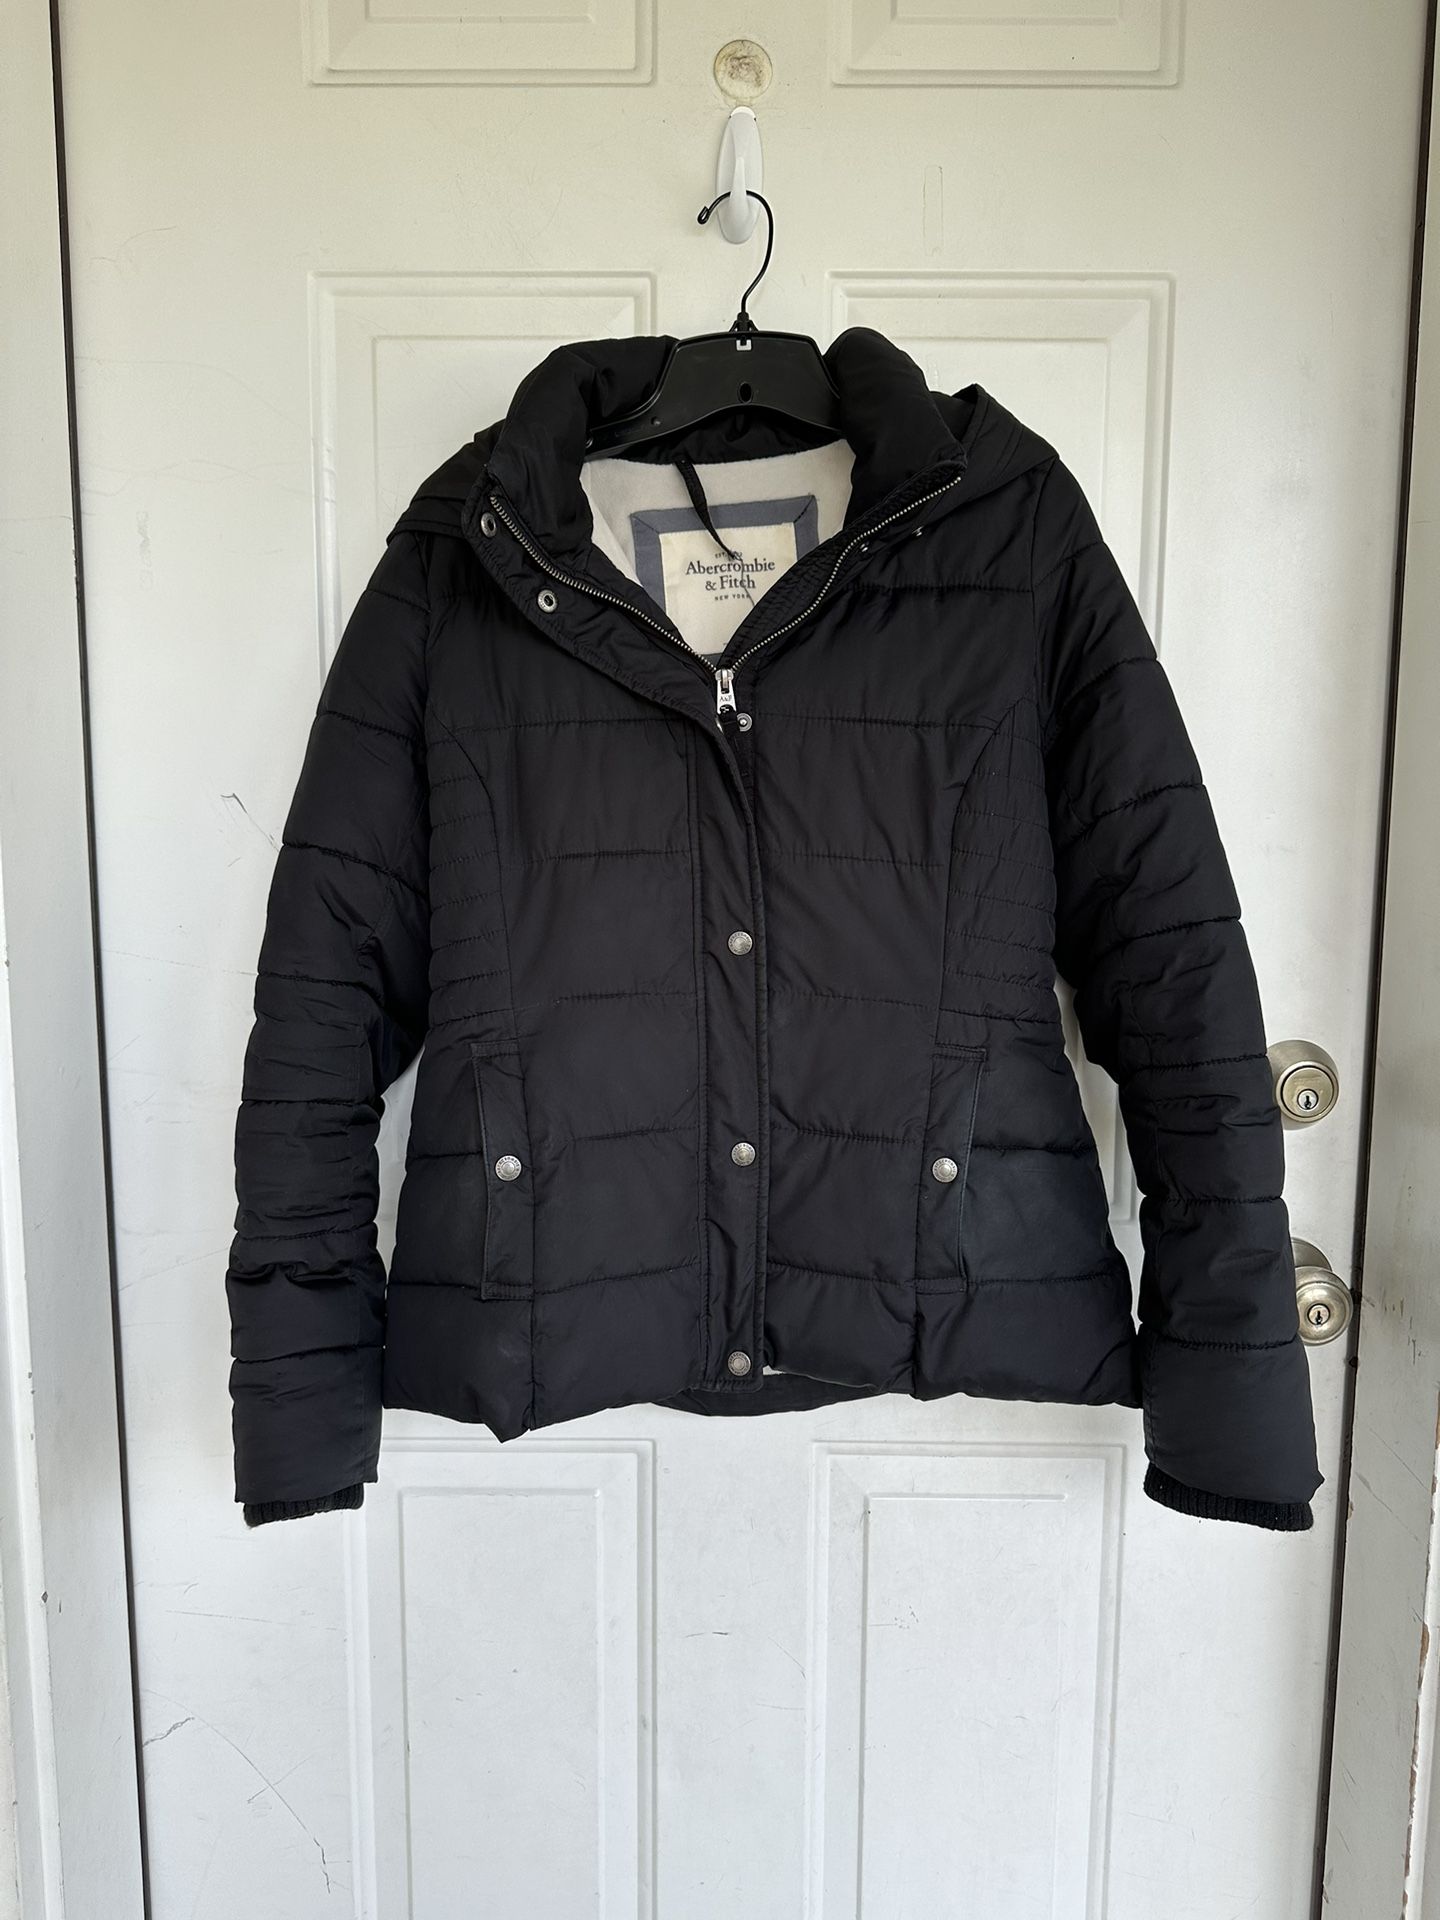 Abercrombie & Fitch Puffer Jacket Women’s Small Hooded Black Fleece Lined Size L